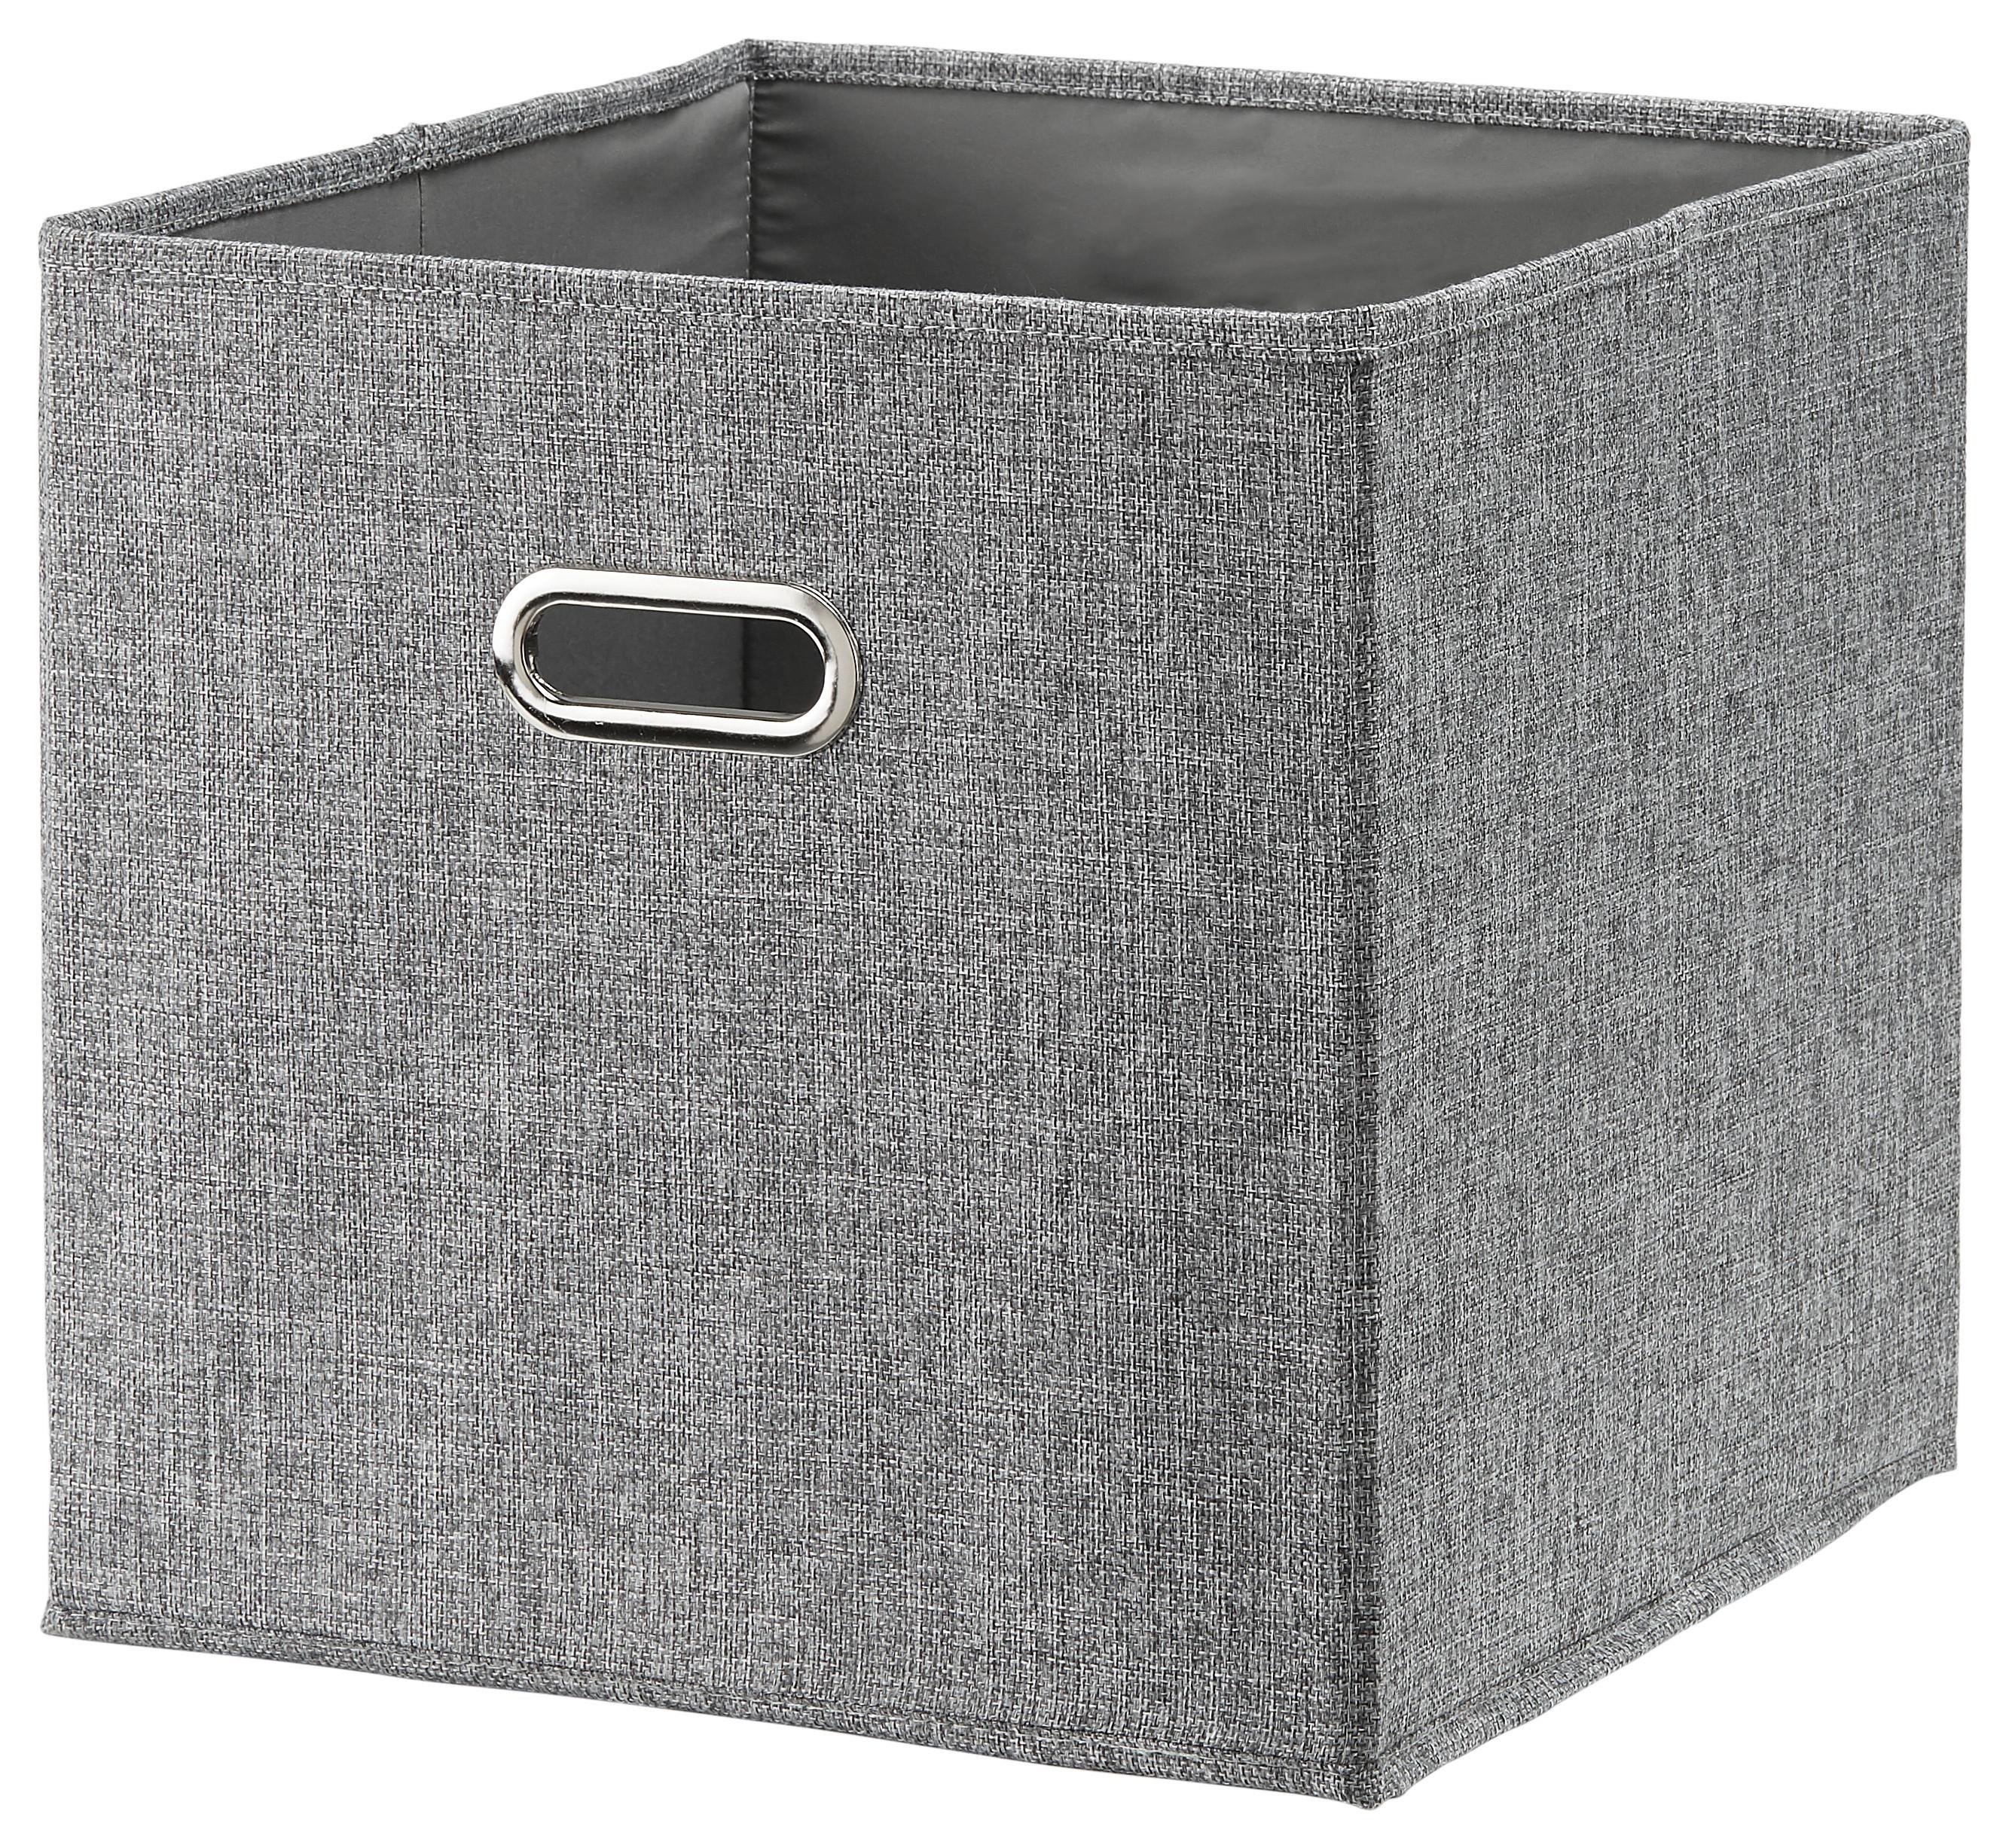 Skládací Krabice Bobby Ca.34l -Ext- -Akt- -Top- - šedá, Moderní, karton/textil (33/32/33cm) - Premium Living